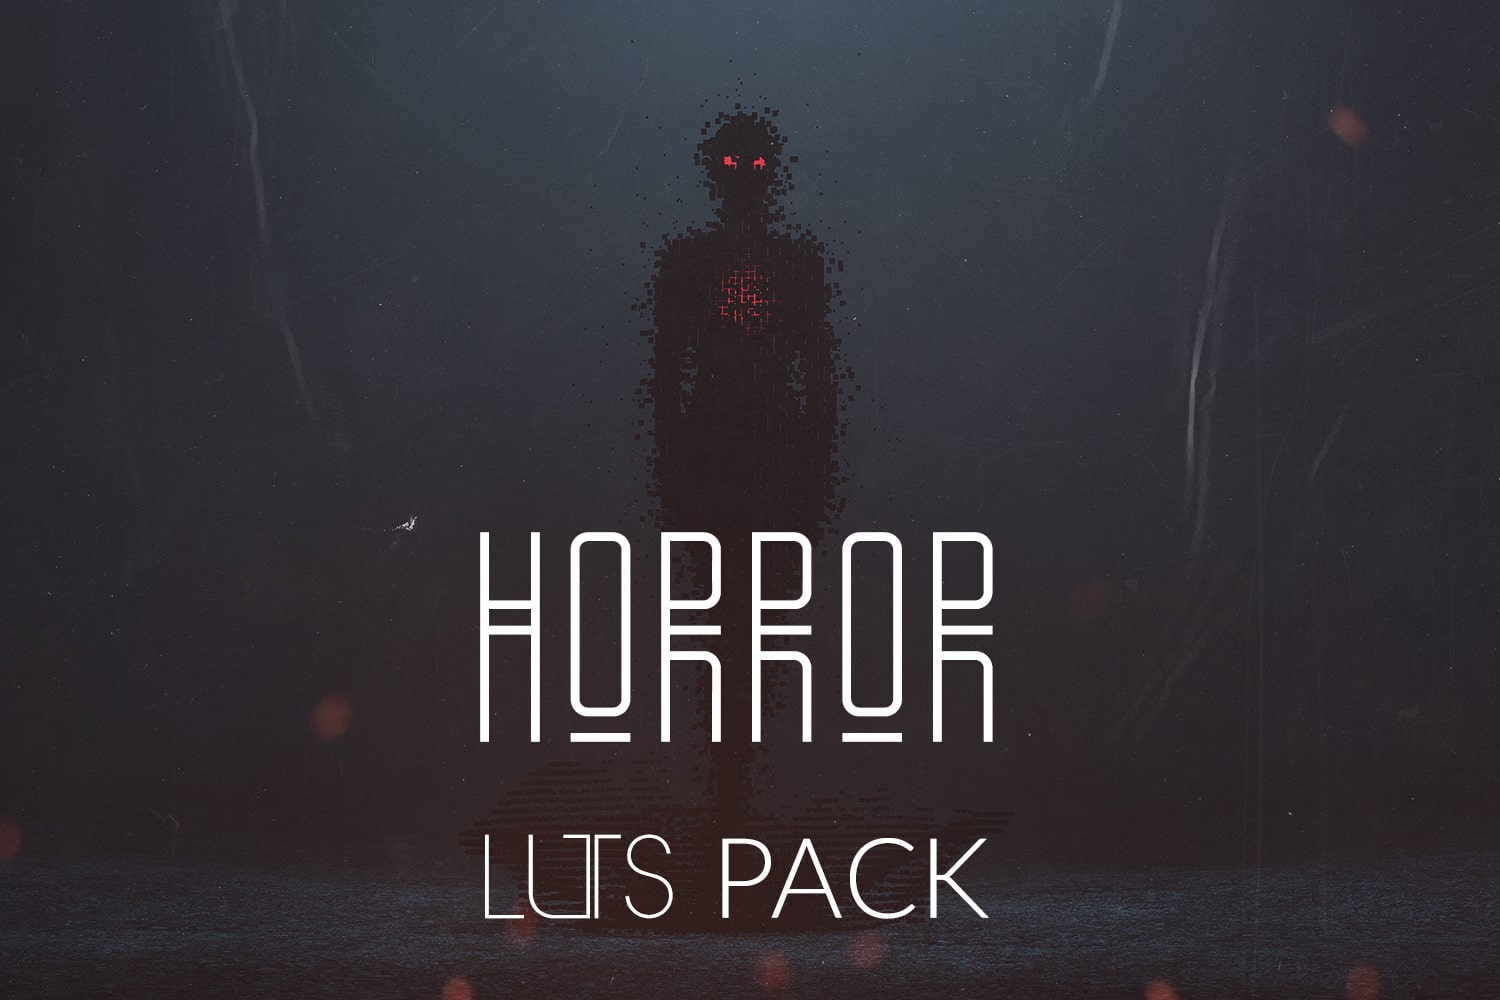 100 Horror LUTs Pack